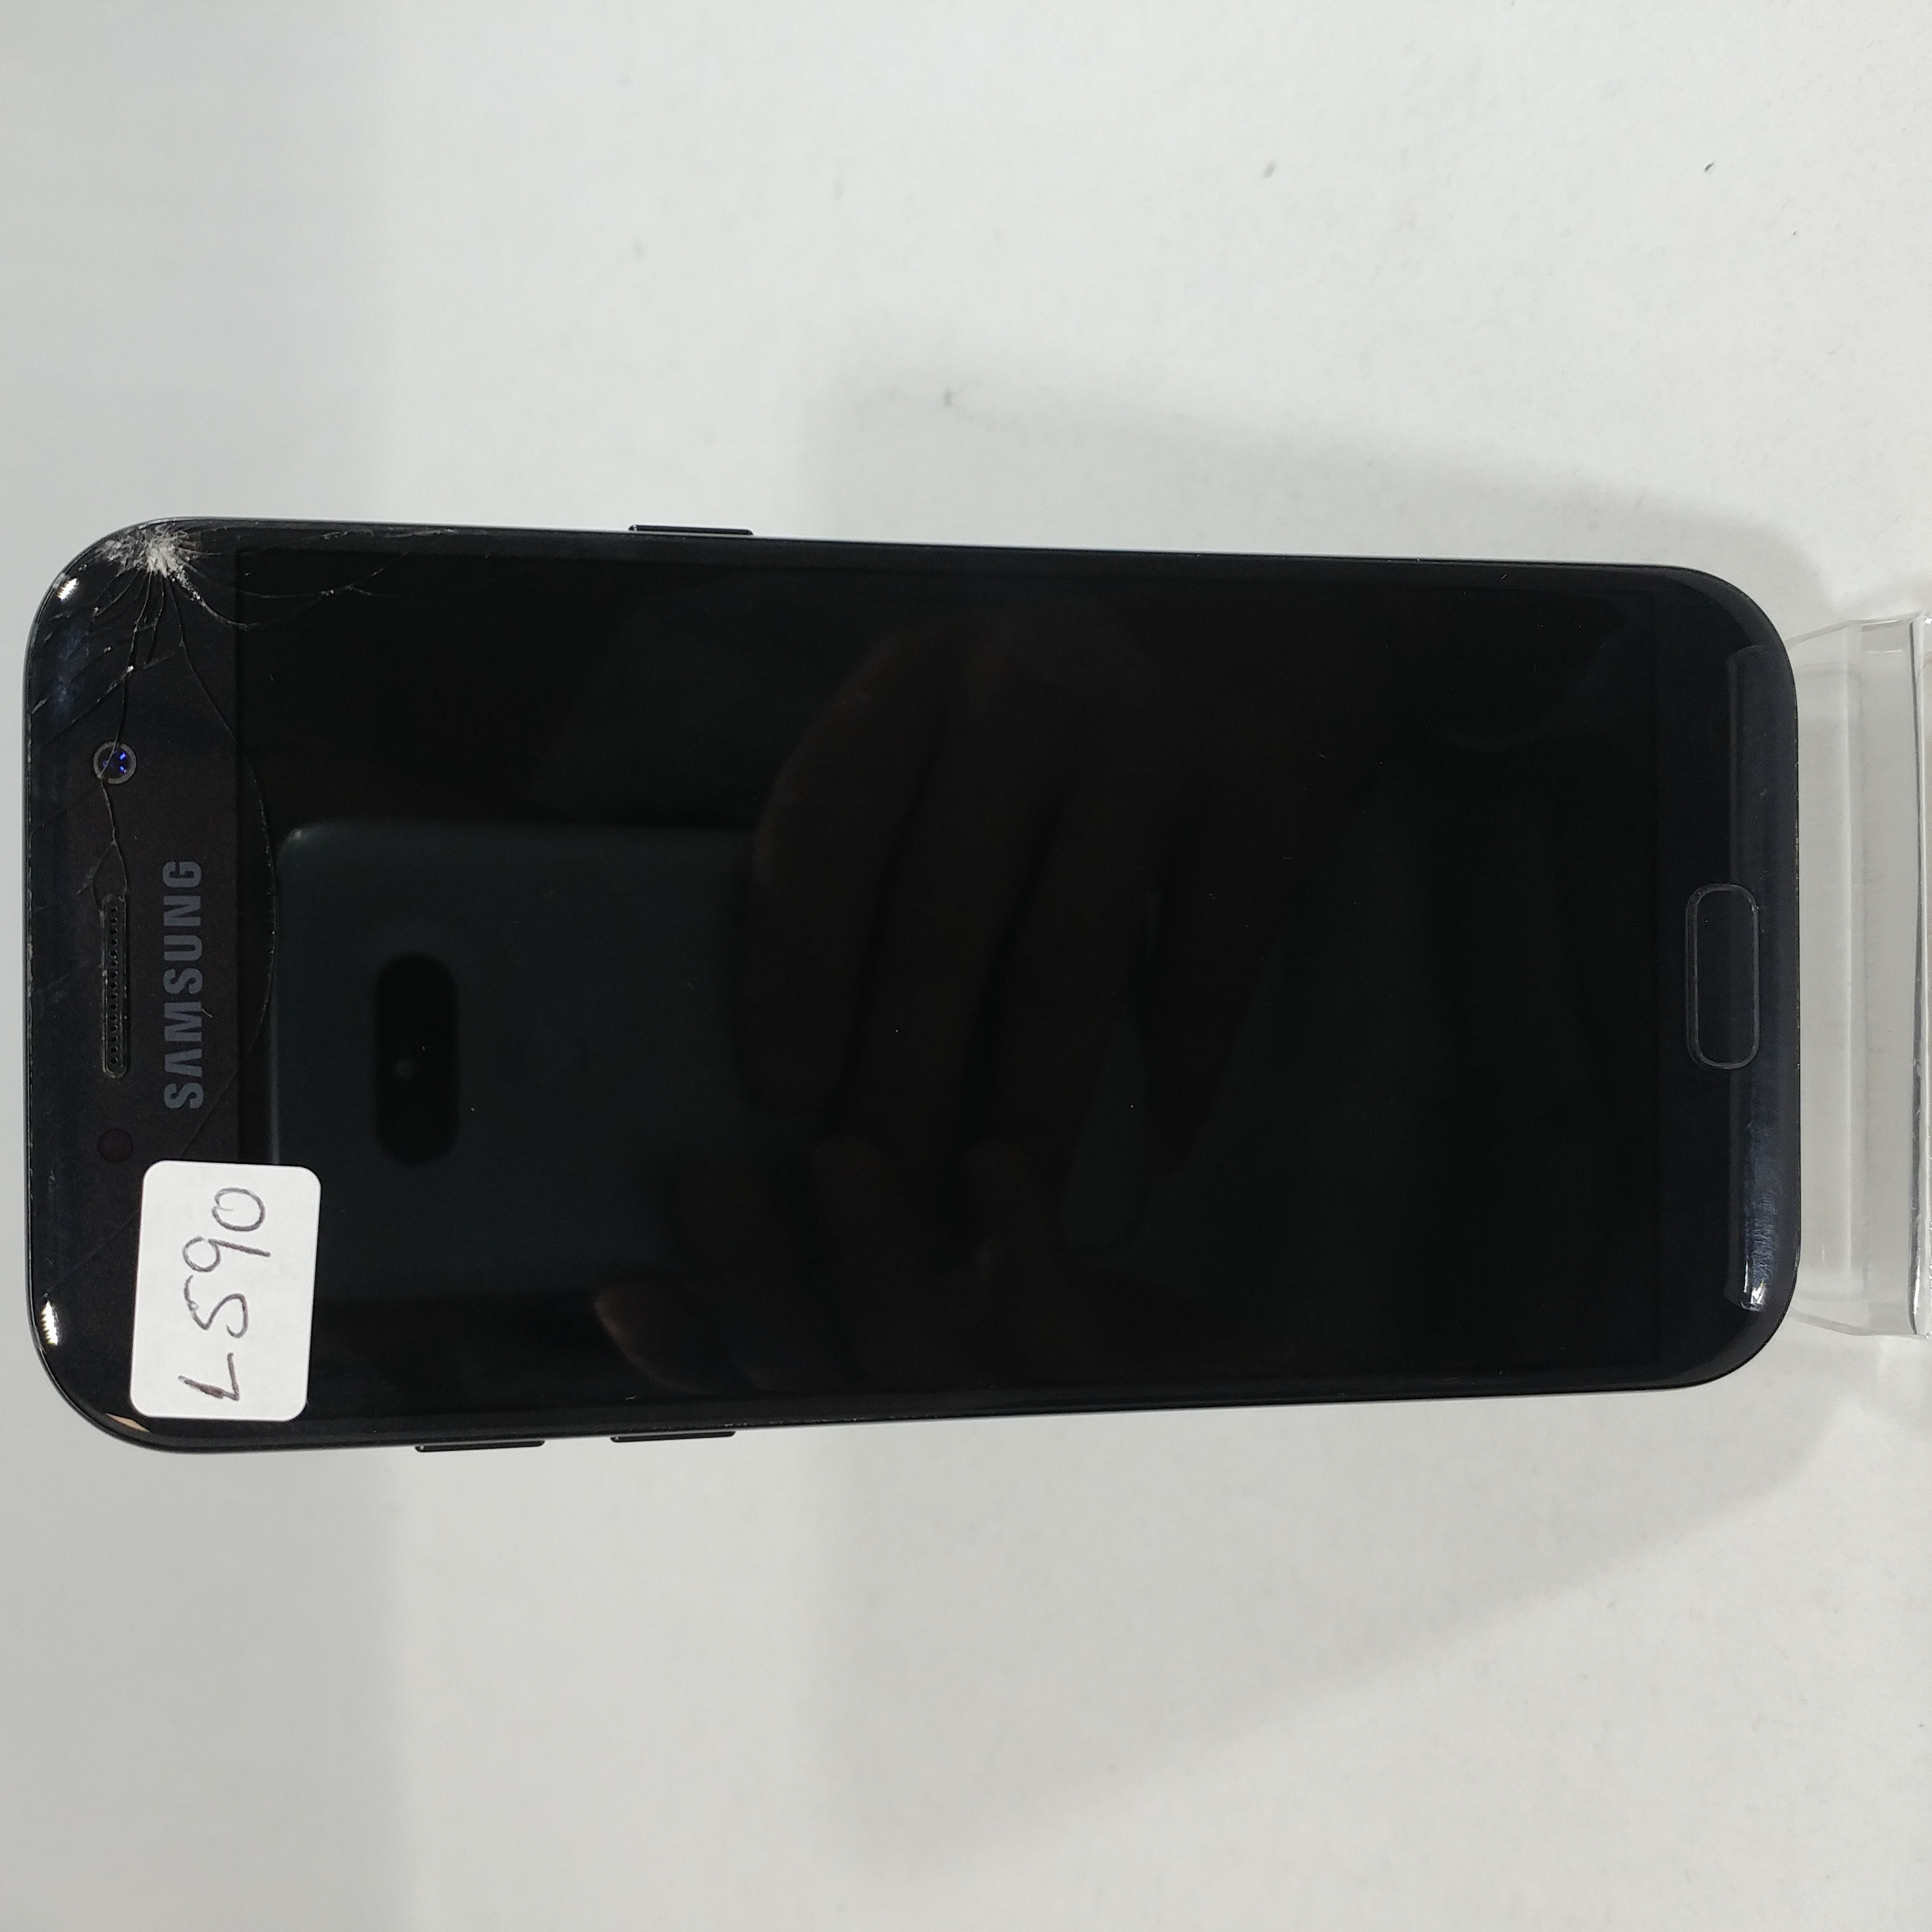 Samsung galaxy a5 2017 unlock code free for 5053